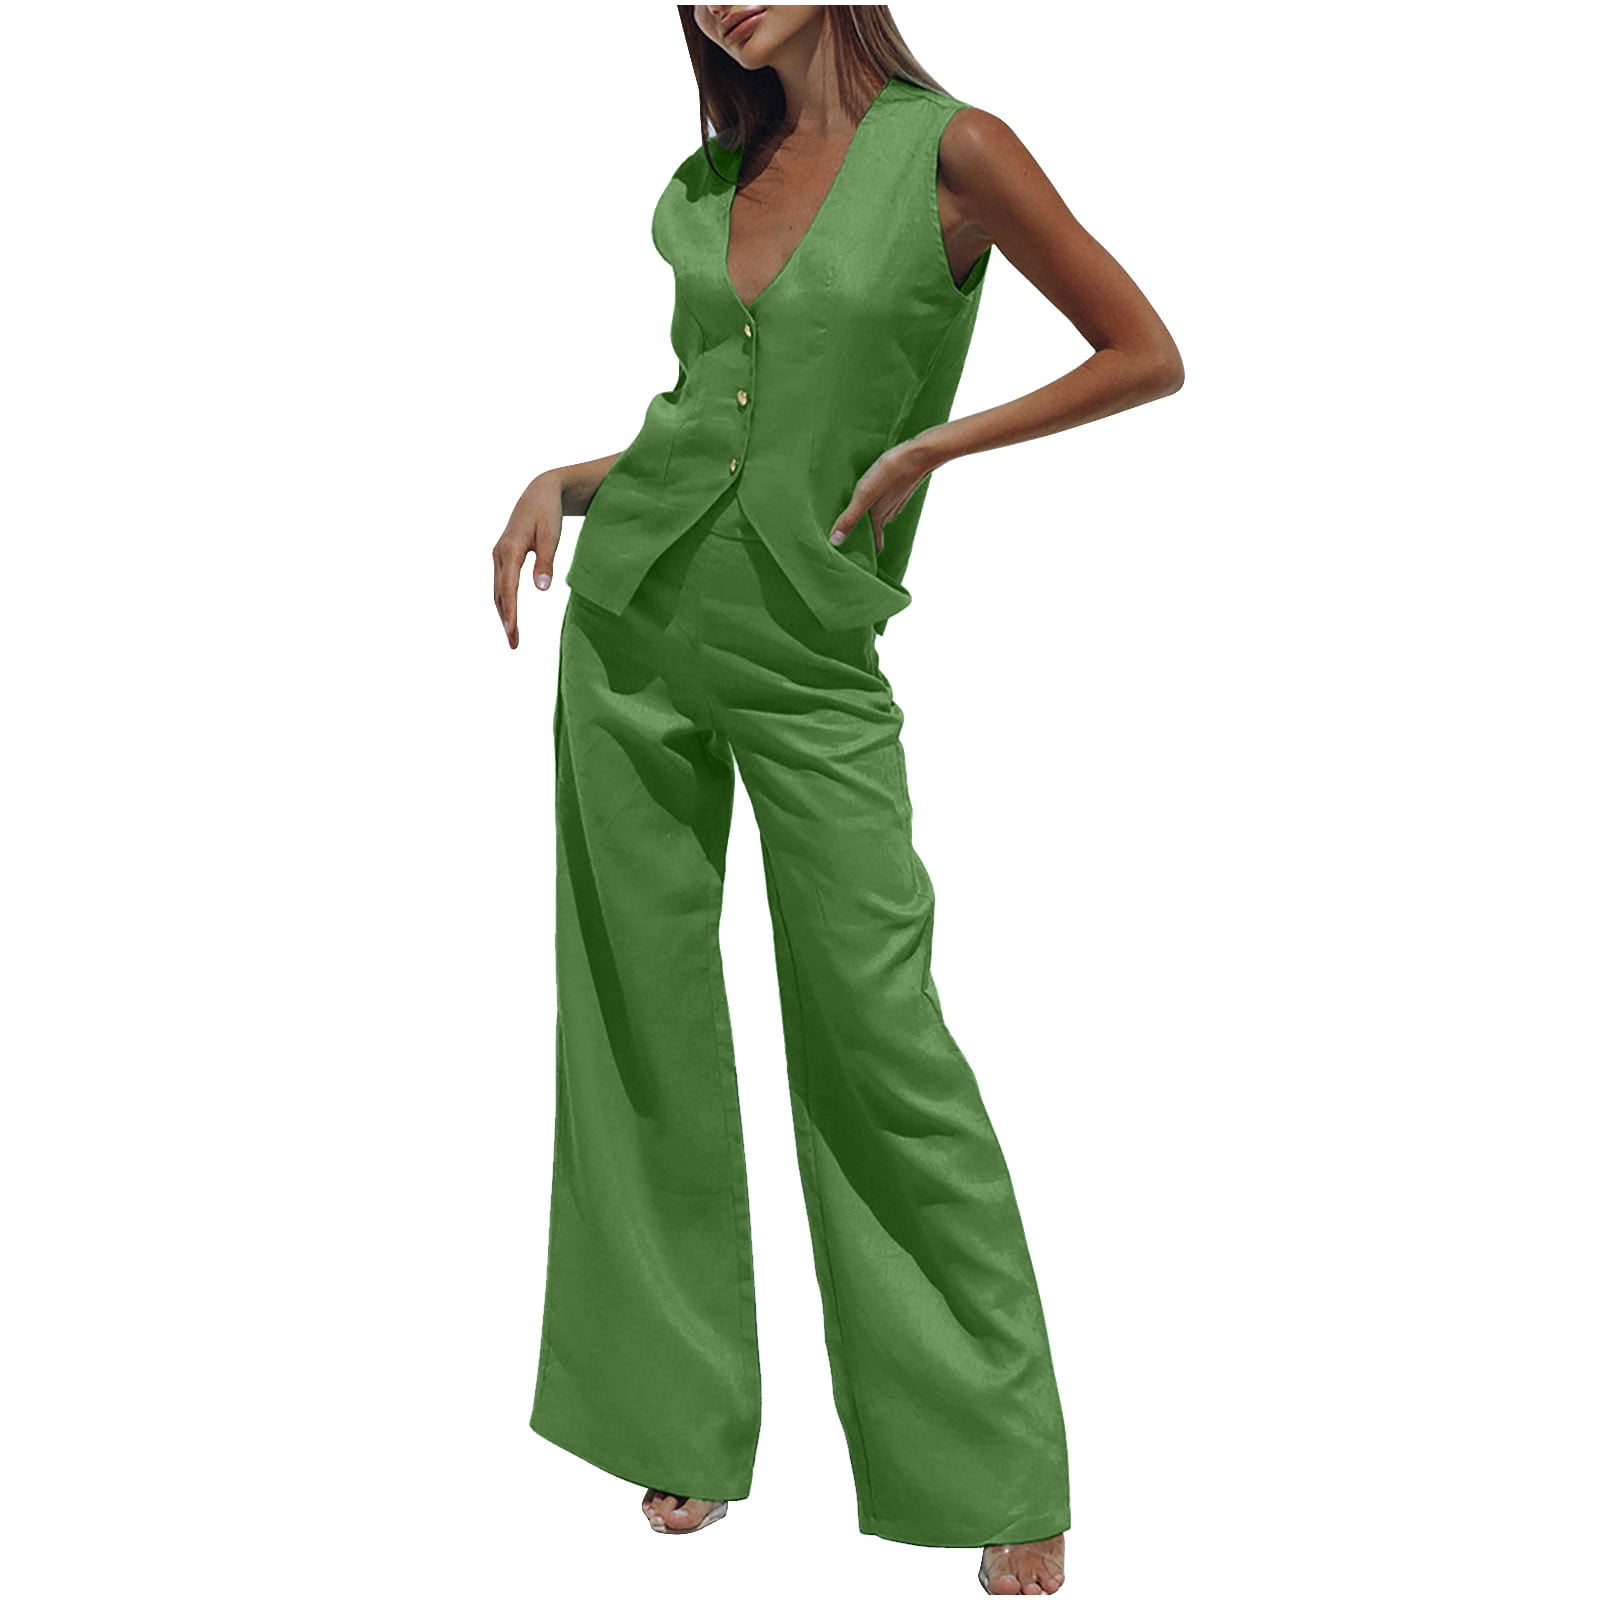 Dyegold 2 Piece Outfits for Women Deep V Neck Crop Top Side Slit